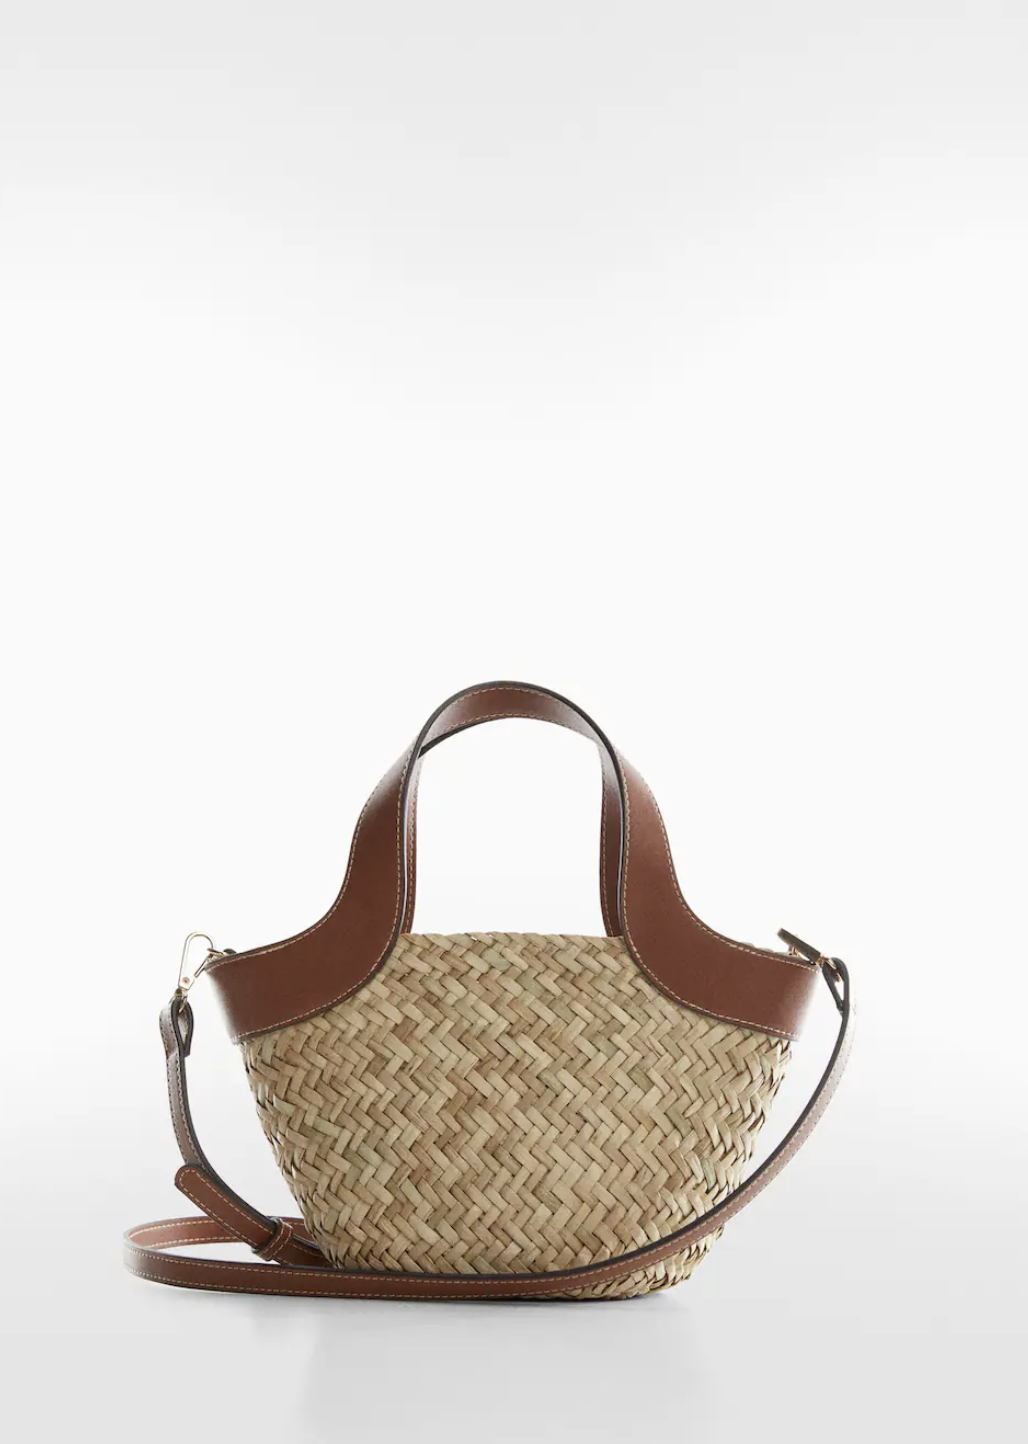 Buy OCT17 Women Straw Beach Bag tote Shoulder Bag Summer Handbag - Yellow  at Amazon.in